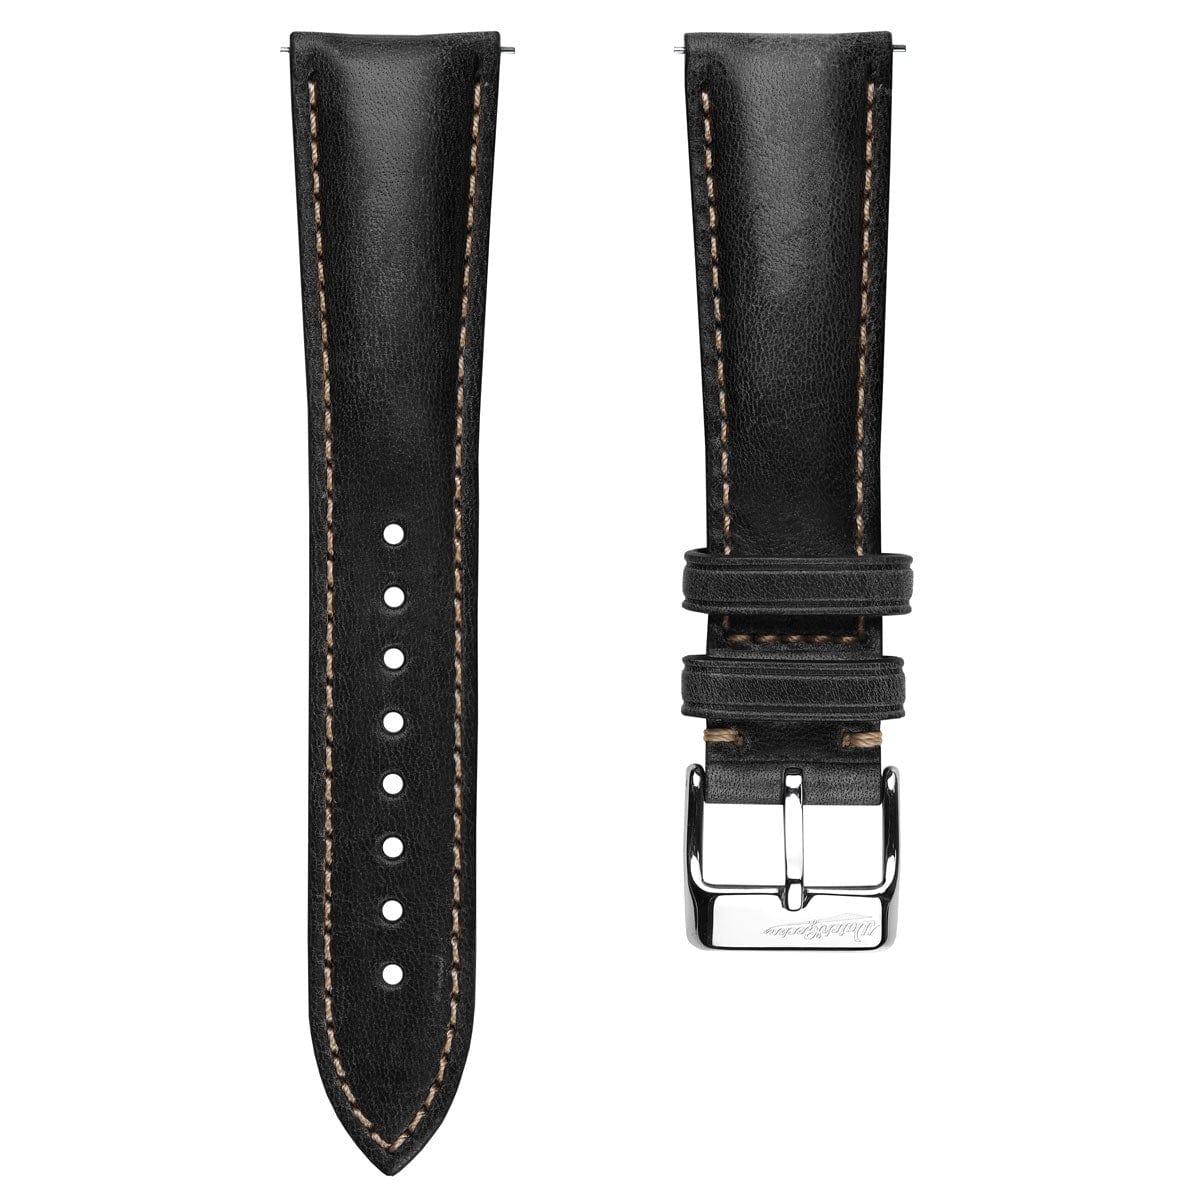 Original Vintage Highley Genuine Leather Watch Strap - Black | WatchGecko